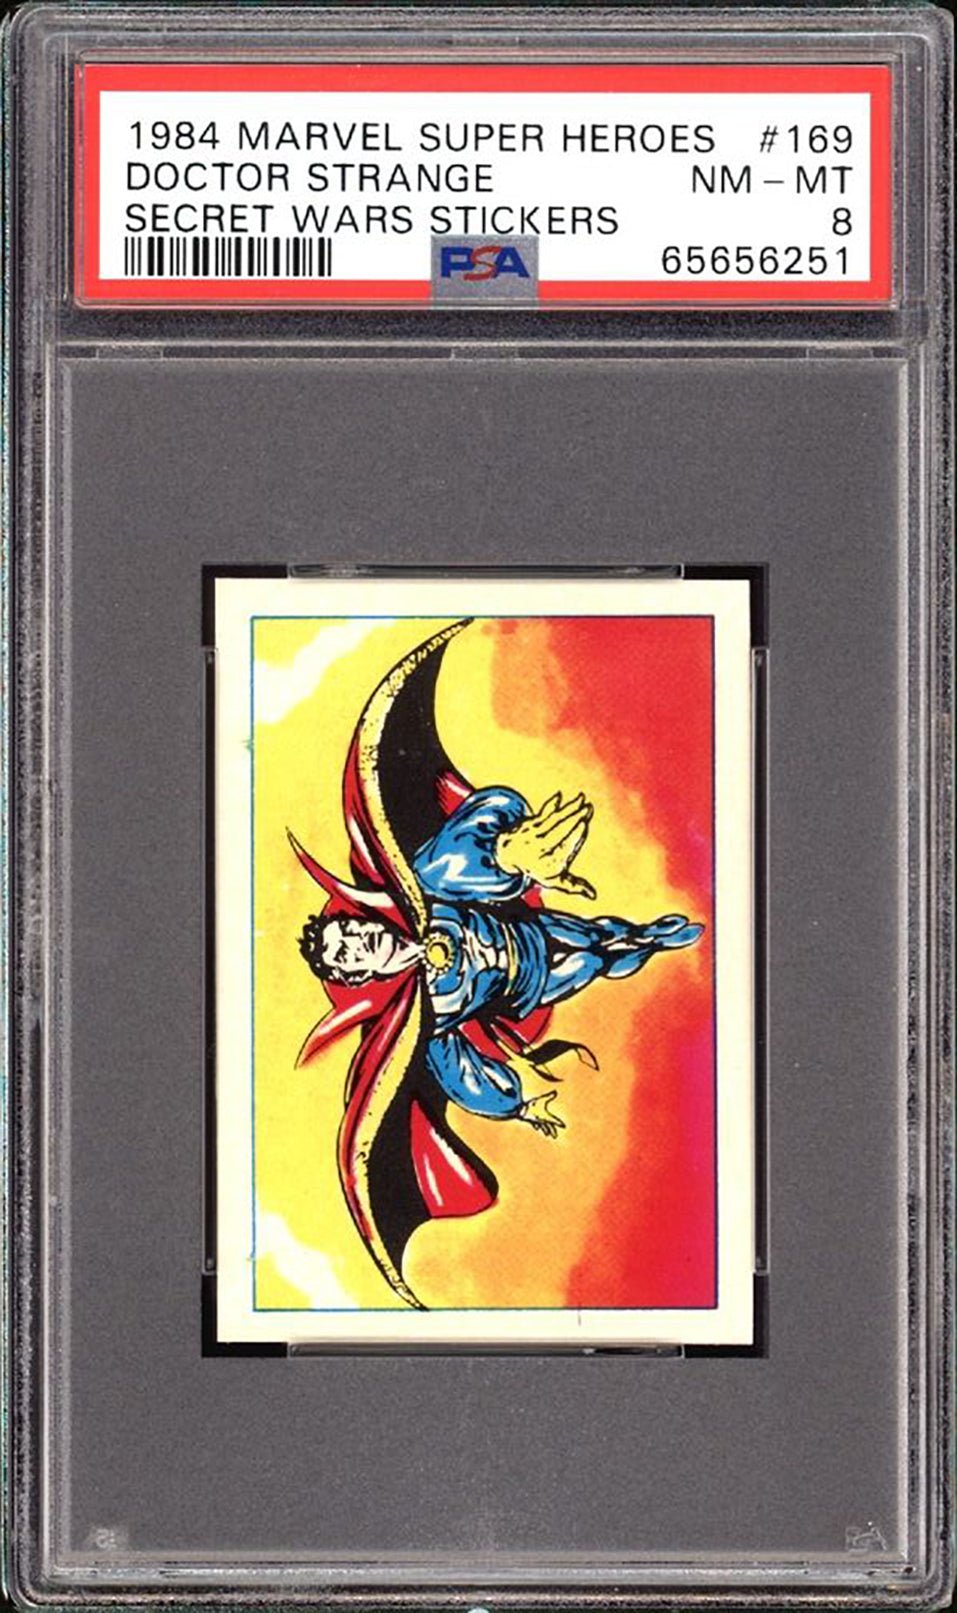 DOCTOR STRANGE PSA 8 1984 Marvel Super Heroes Secret Wars Sticker #169 C1 Marvel Graded Cards Sticker - Hobby Gems